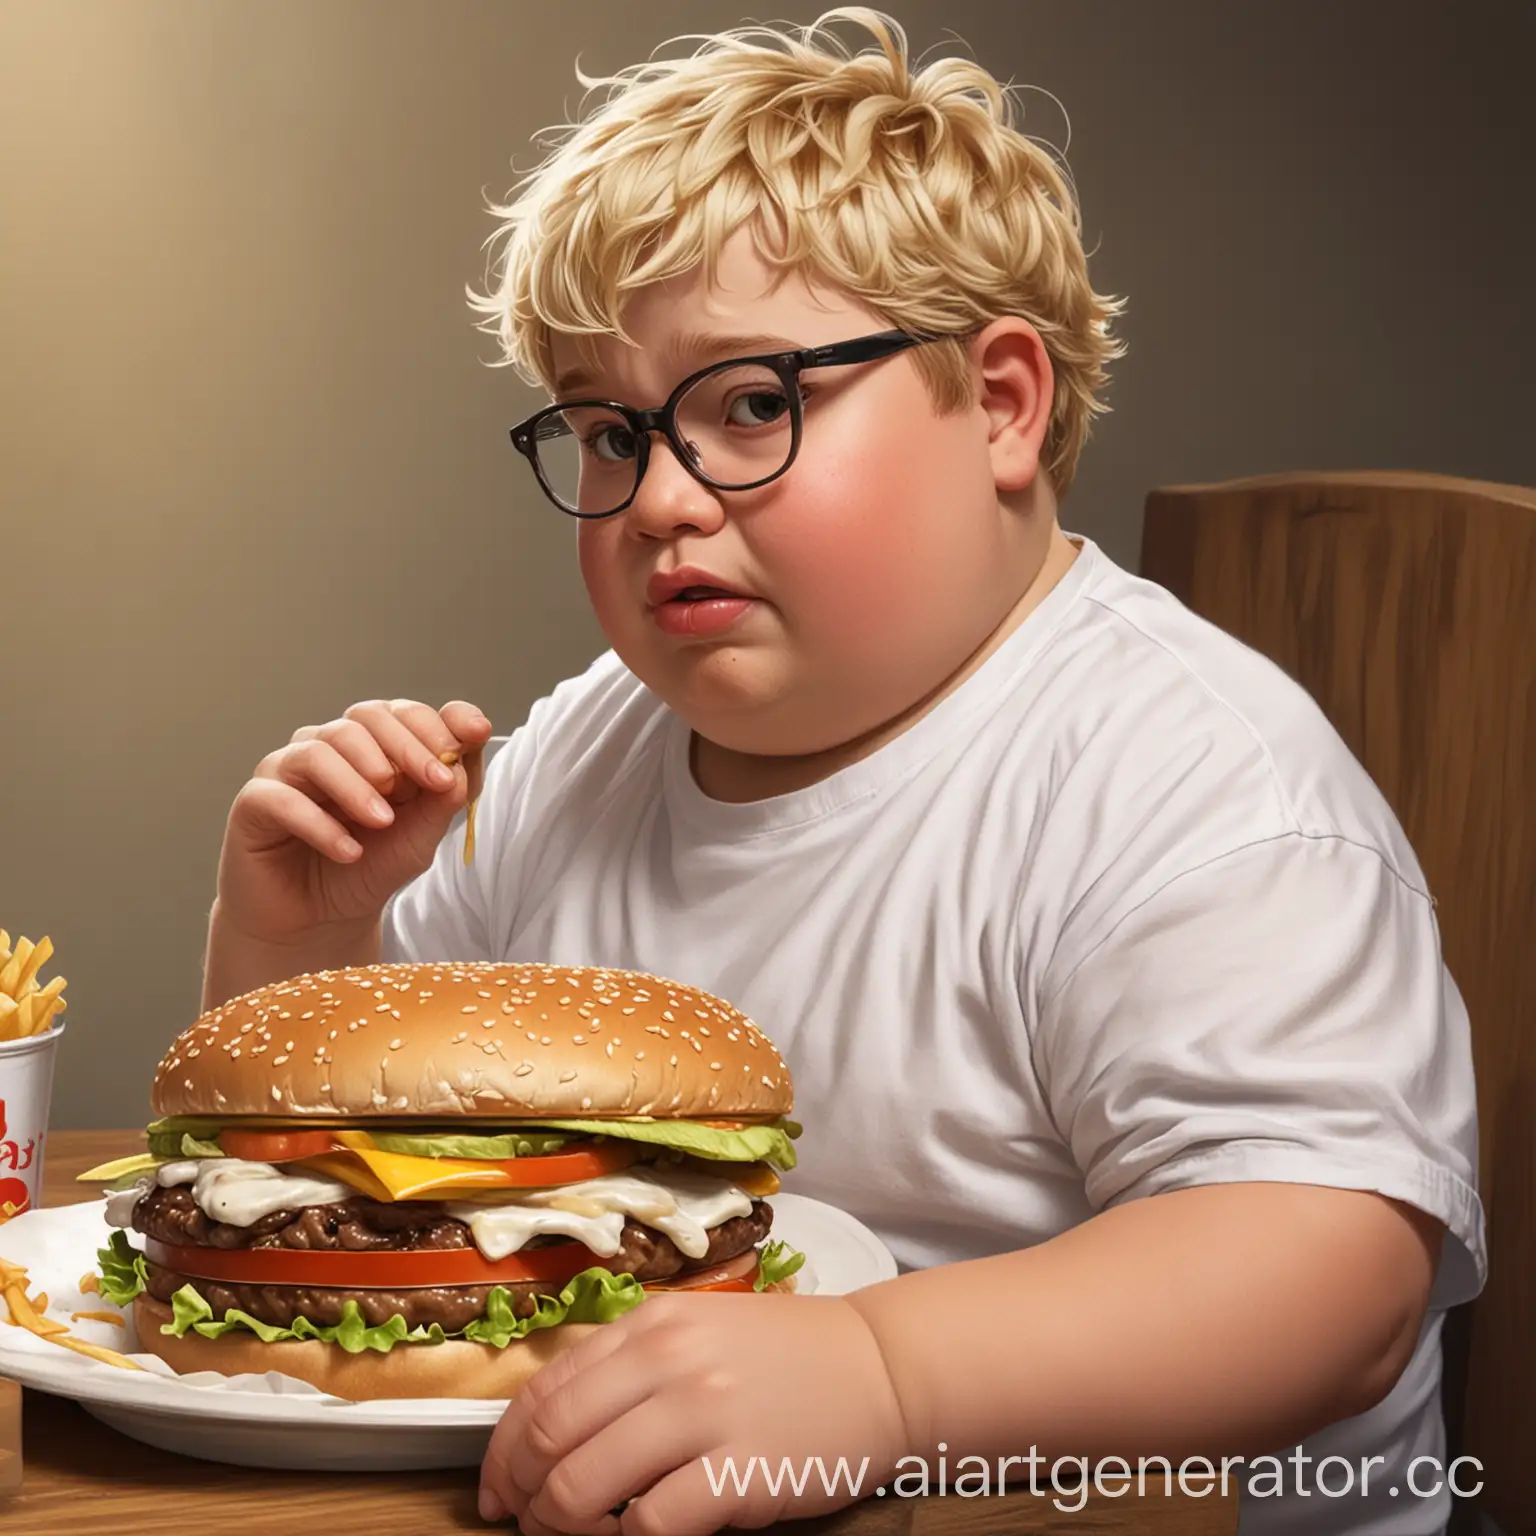 Chubby-Boy-Enjoying-Burgers-Delightful-Moment-of-Indulgence